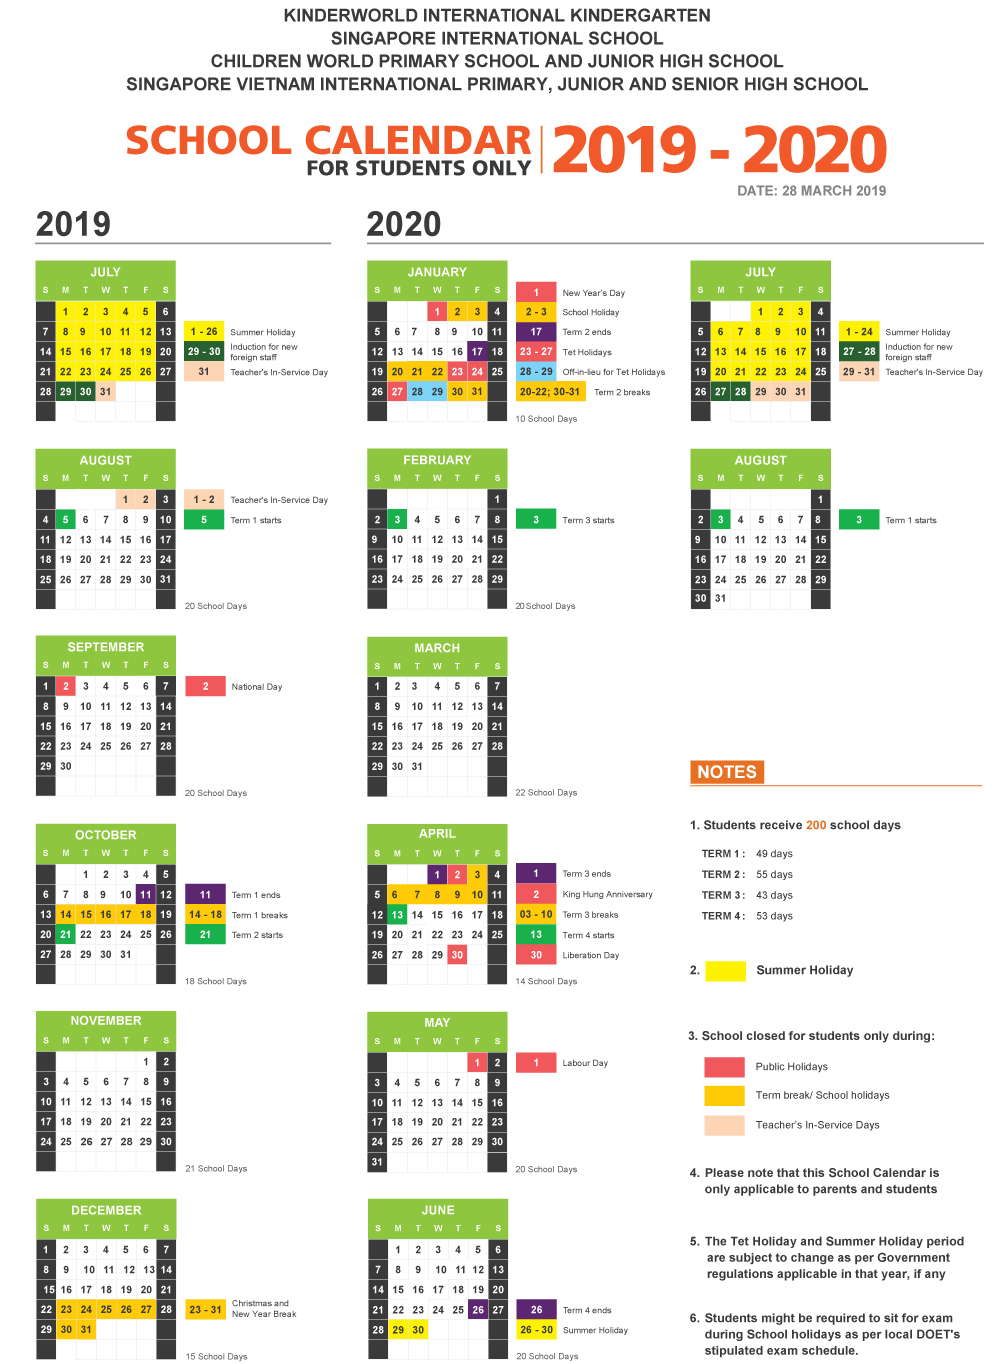 School Calendar - Singapore International School @ Van Phuc